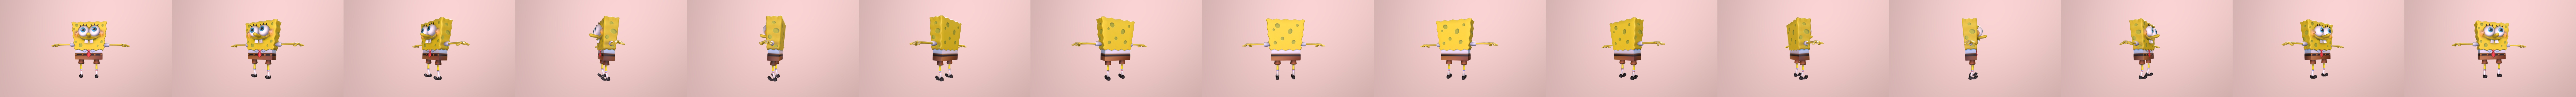 spongebob squarepants gangnam style